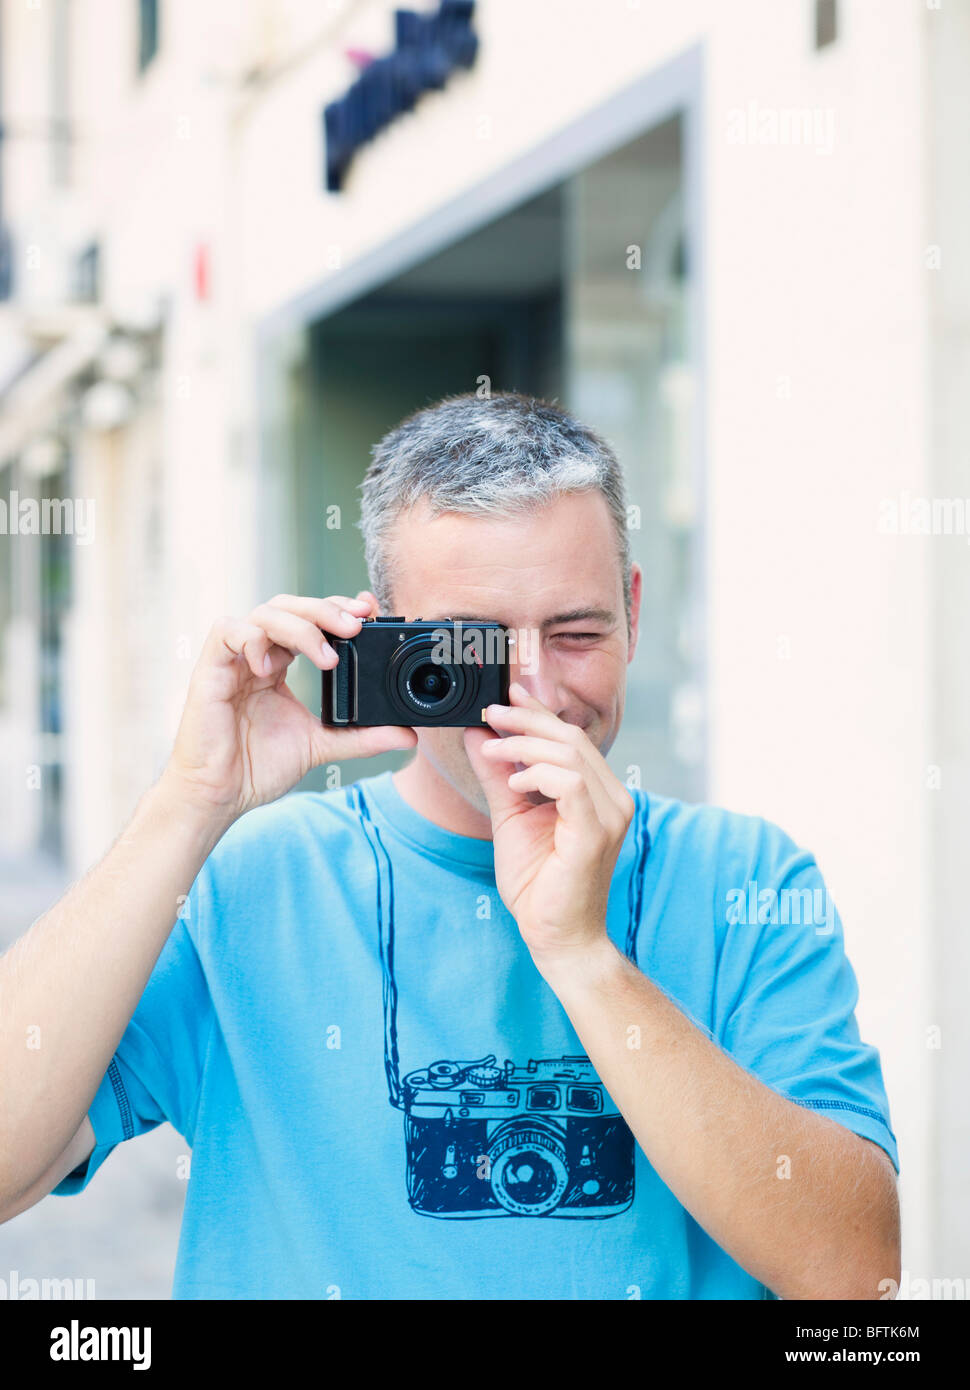 man using camera Stock Photo